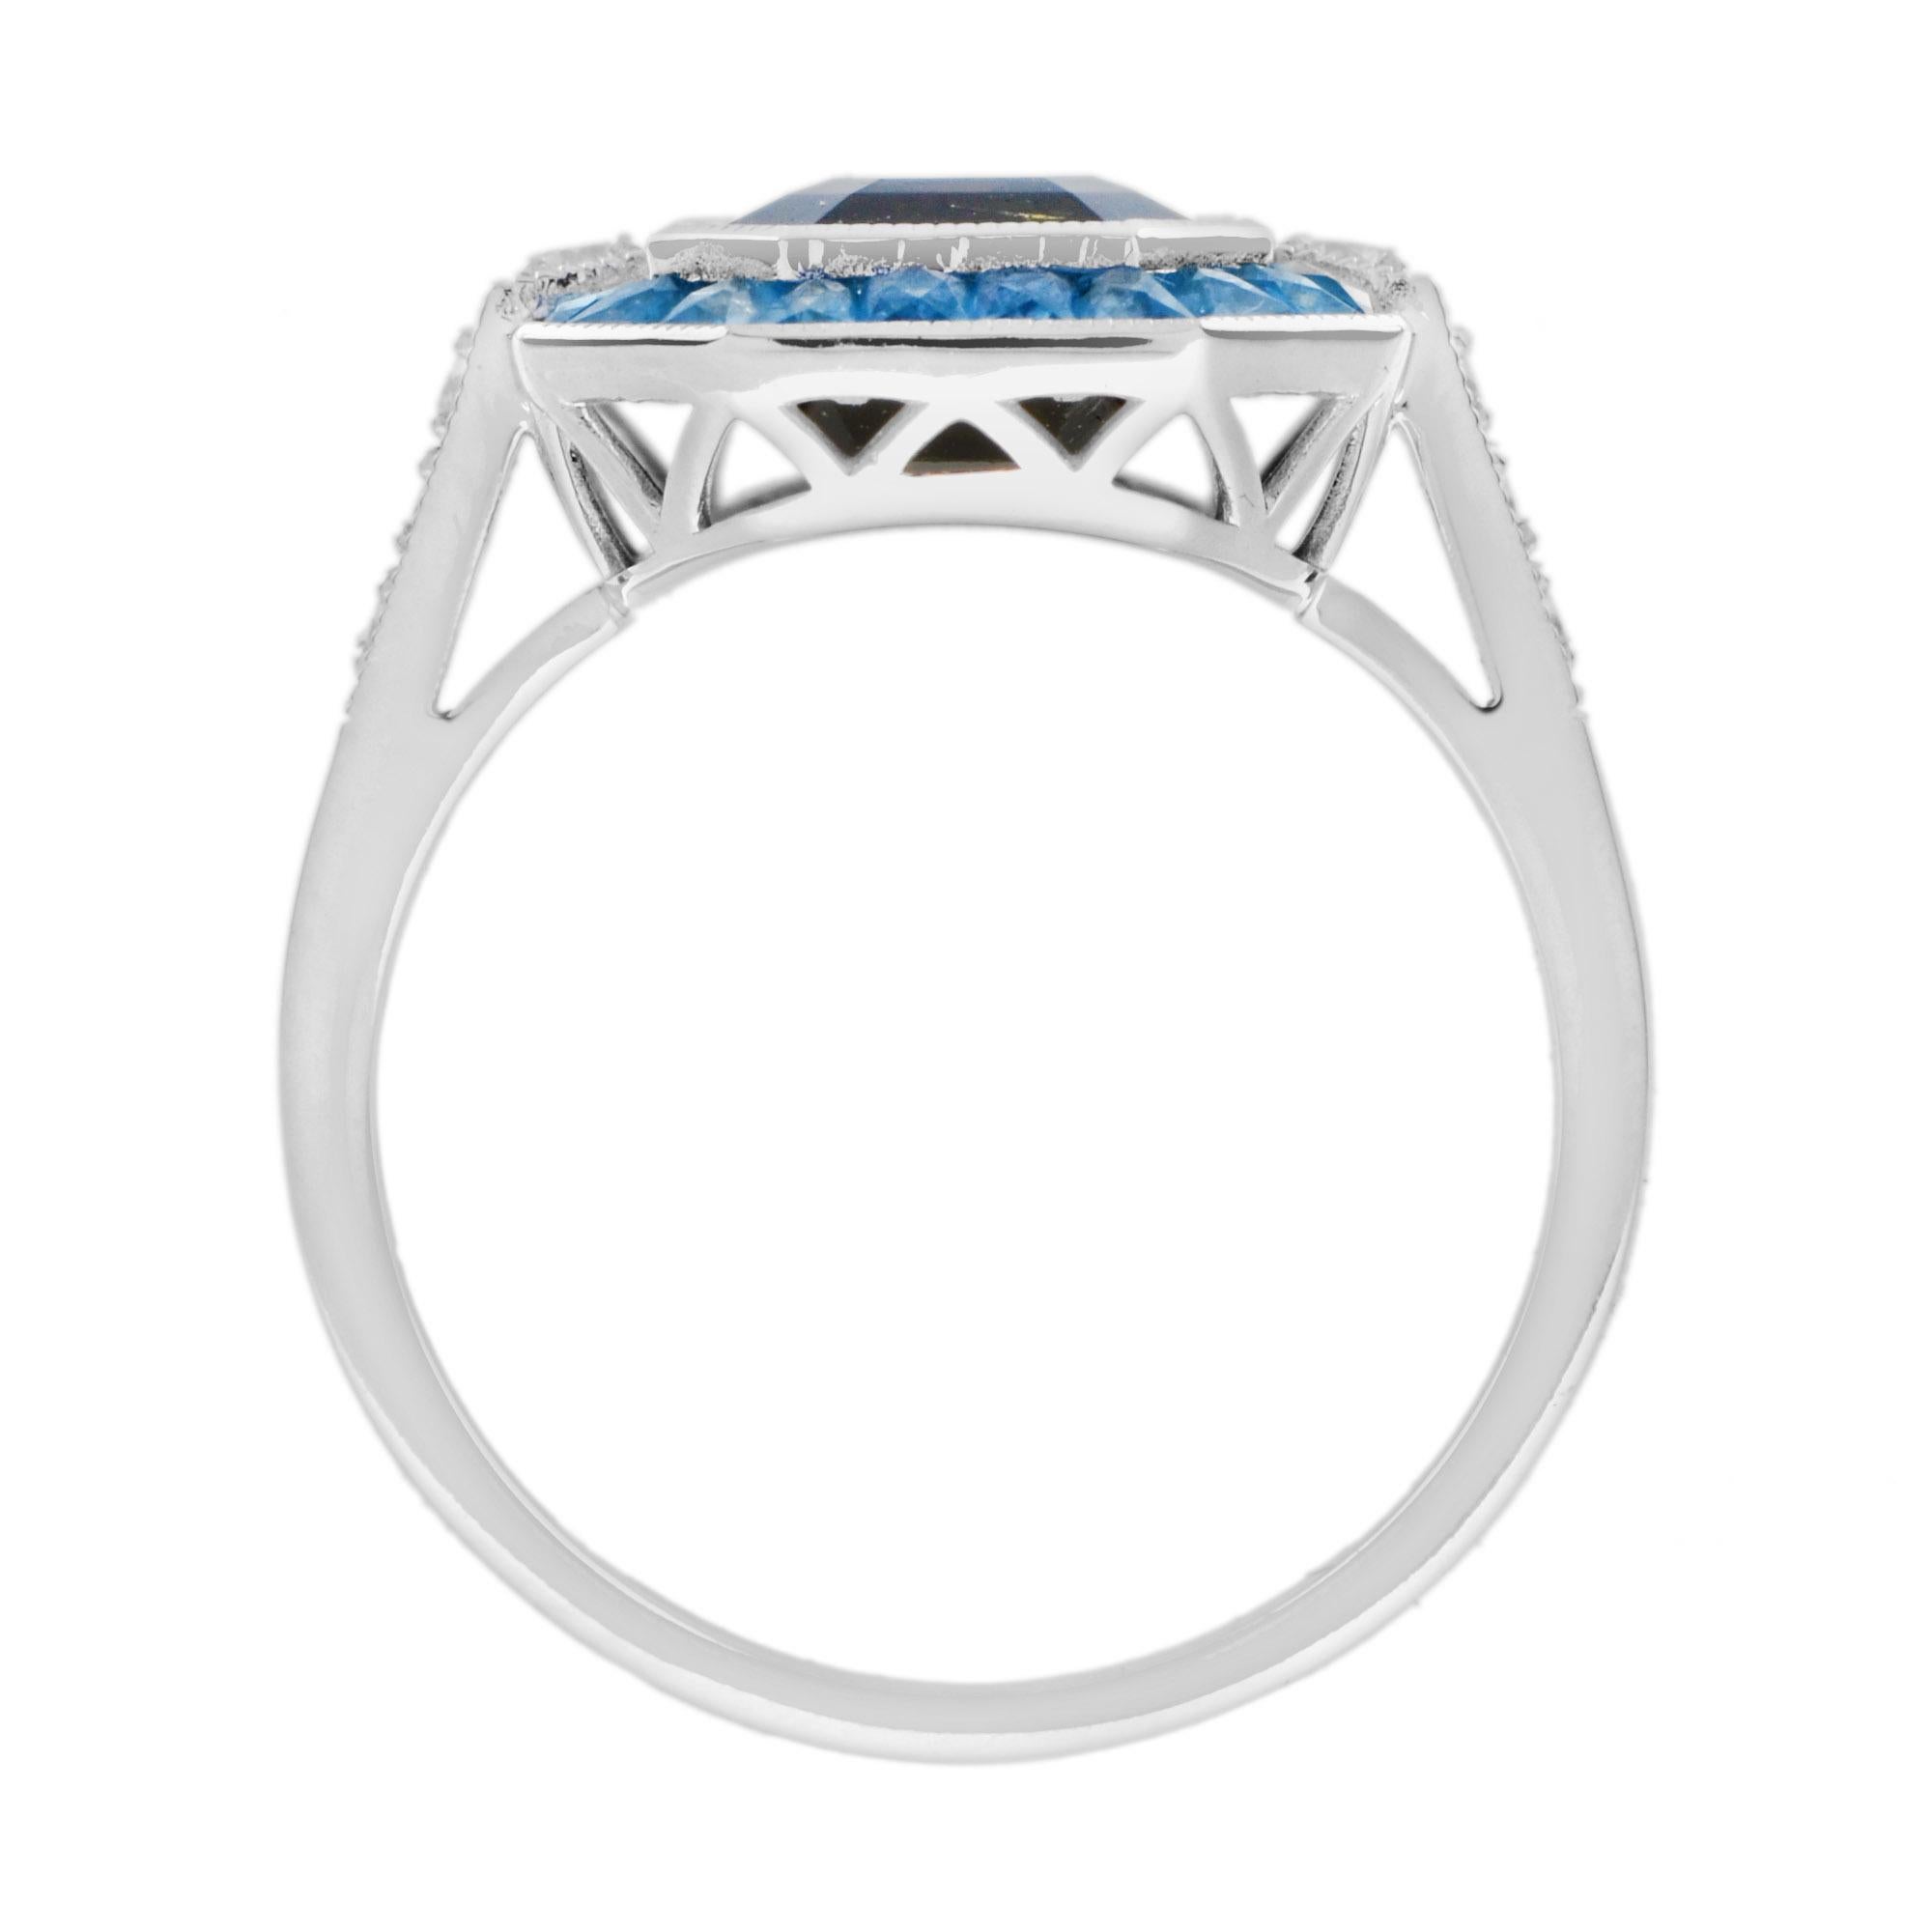 Certified Green Tourmaline London Blue Topaz Diamond Halo Ring in 14K White Gold For Sale 3